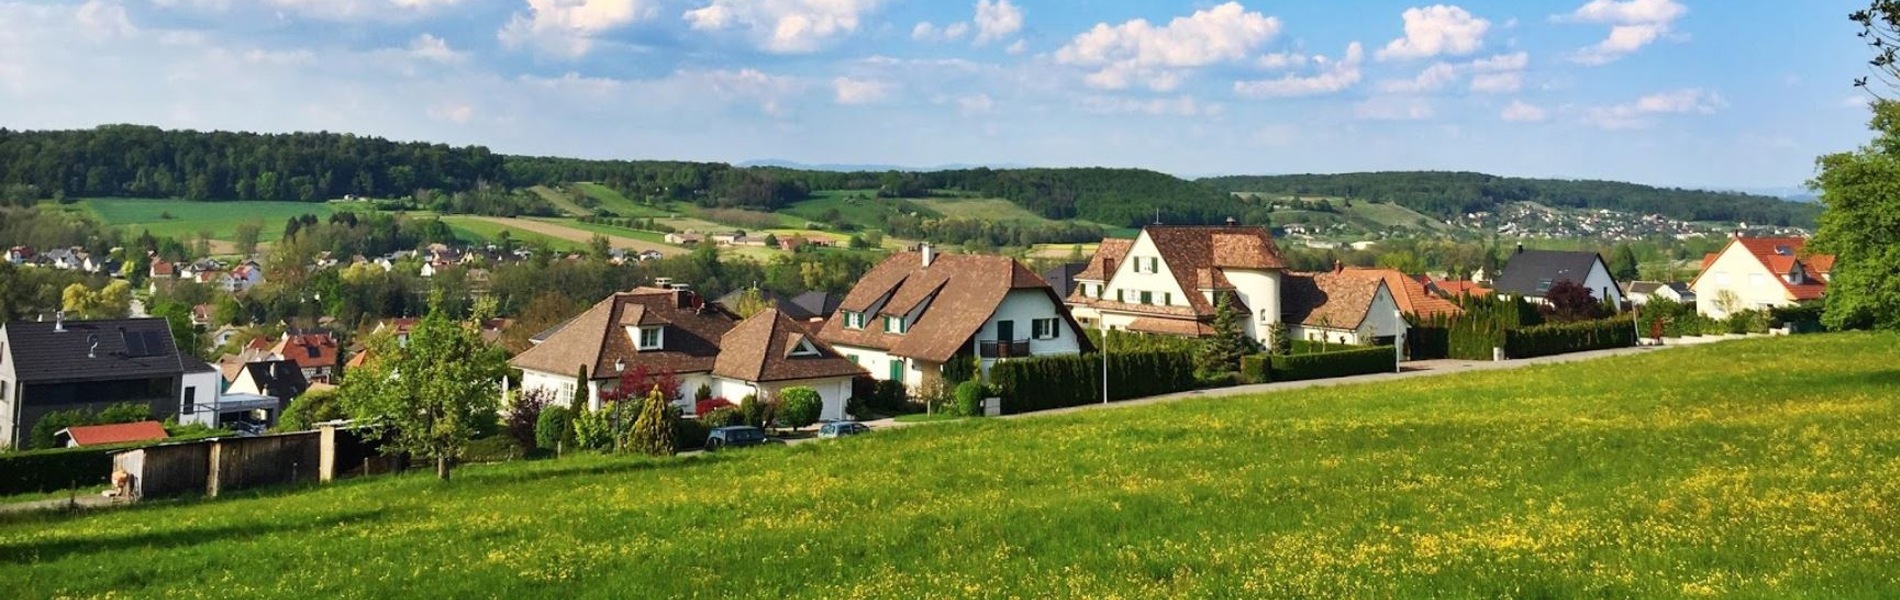 Dorf in Elsass